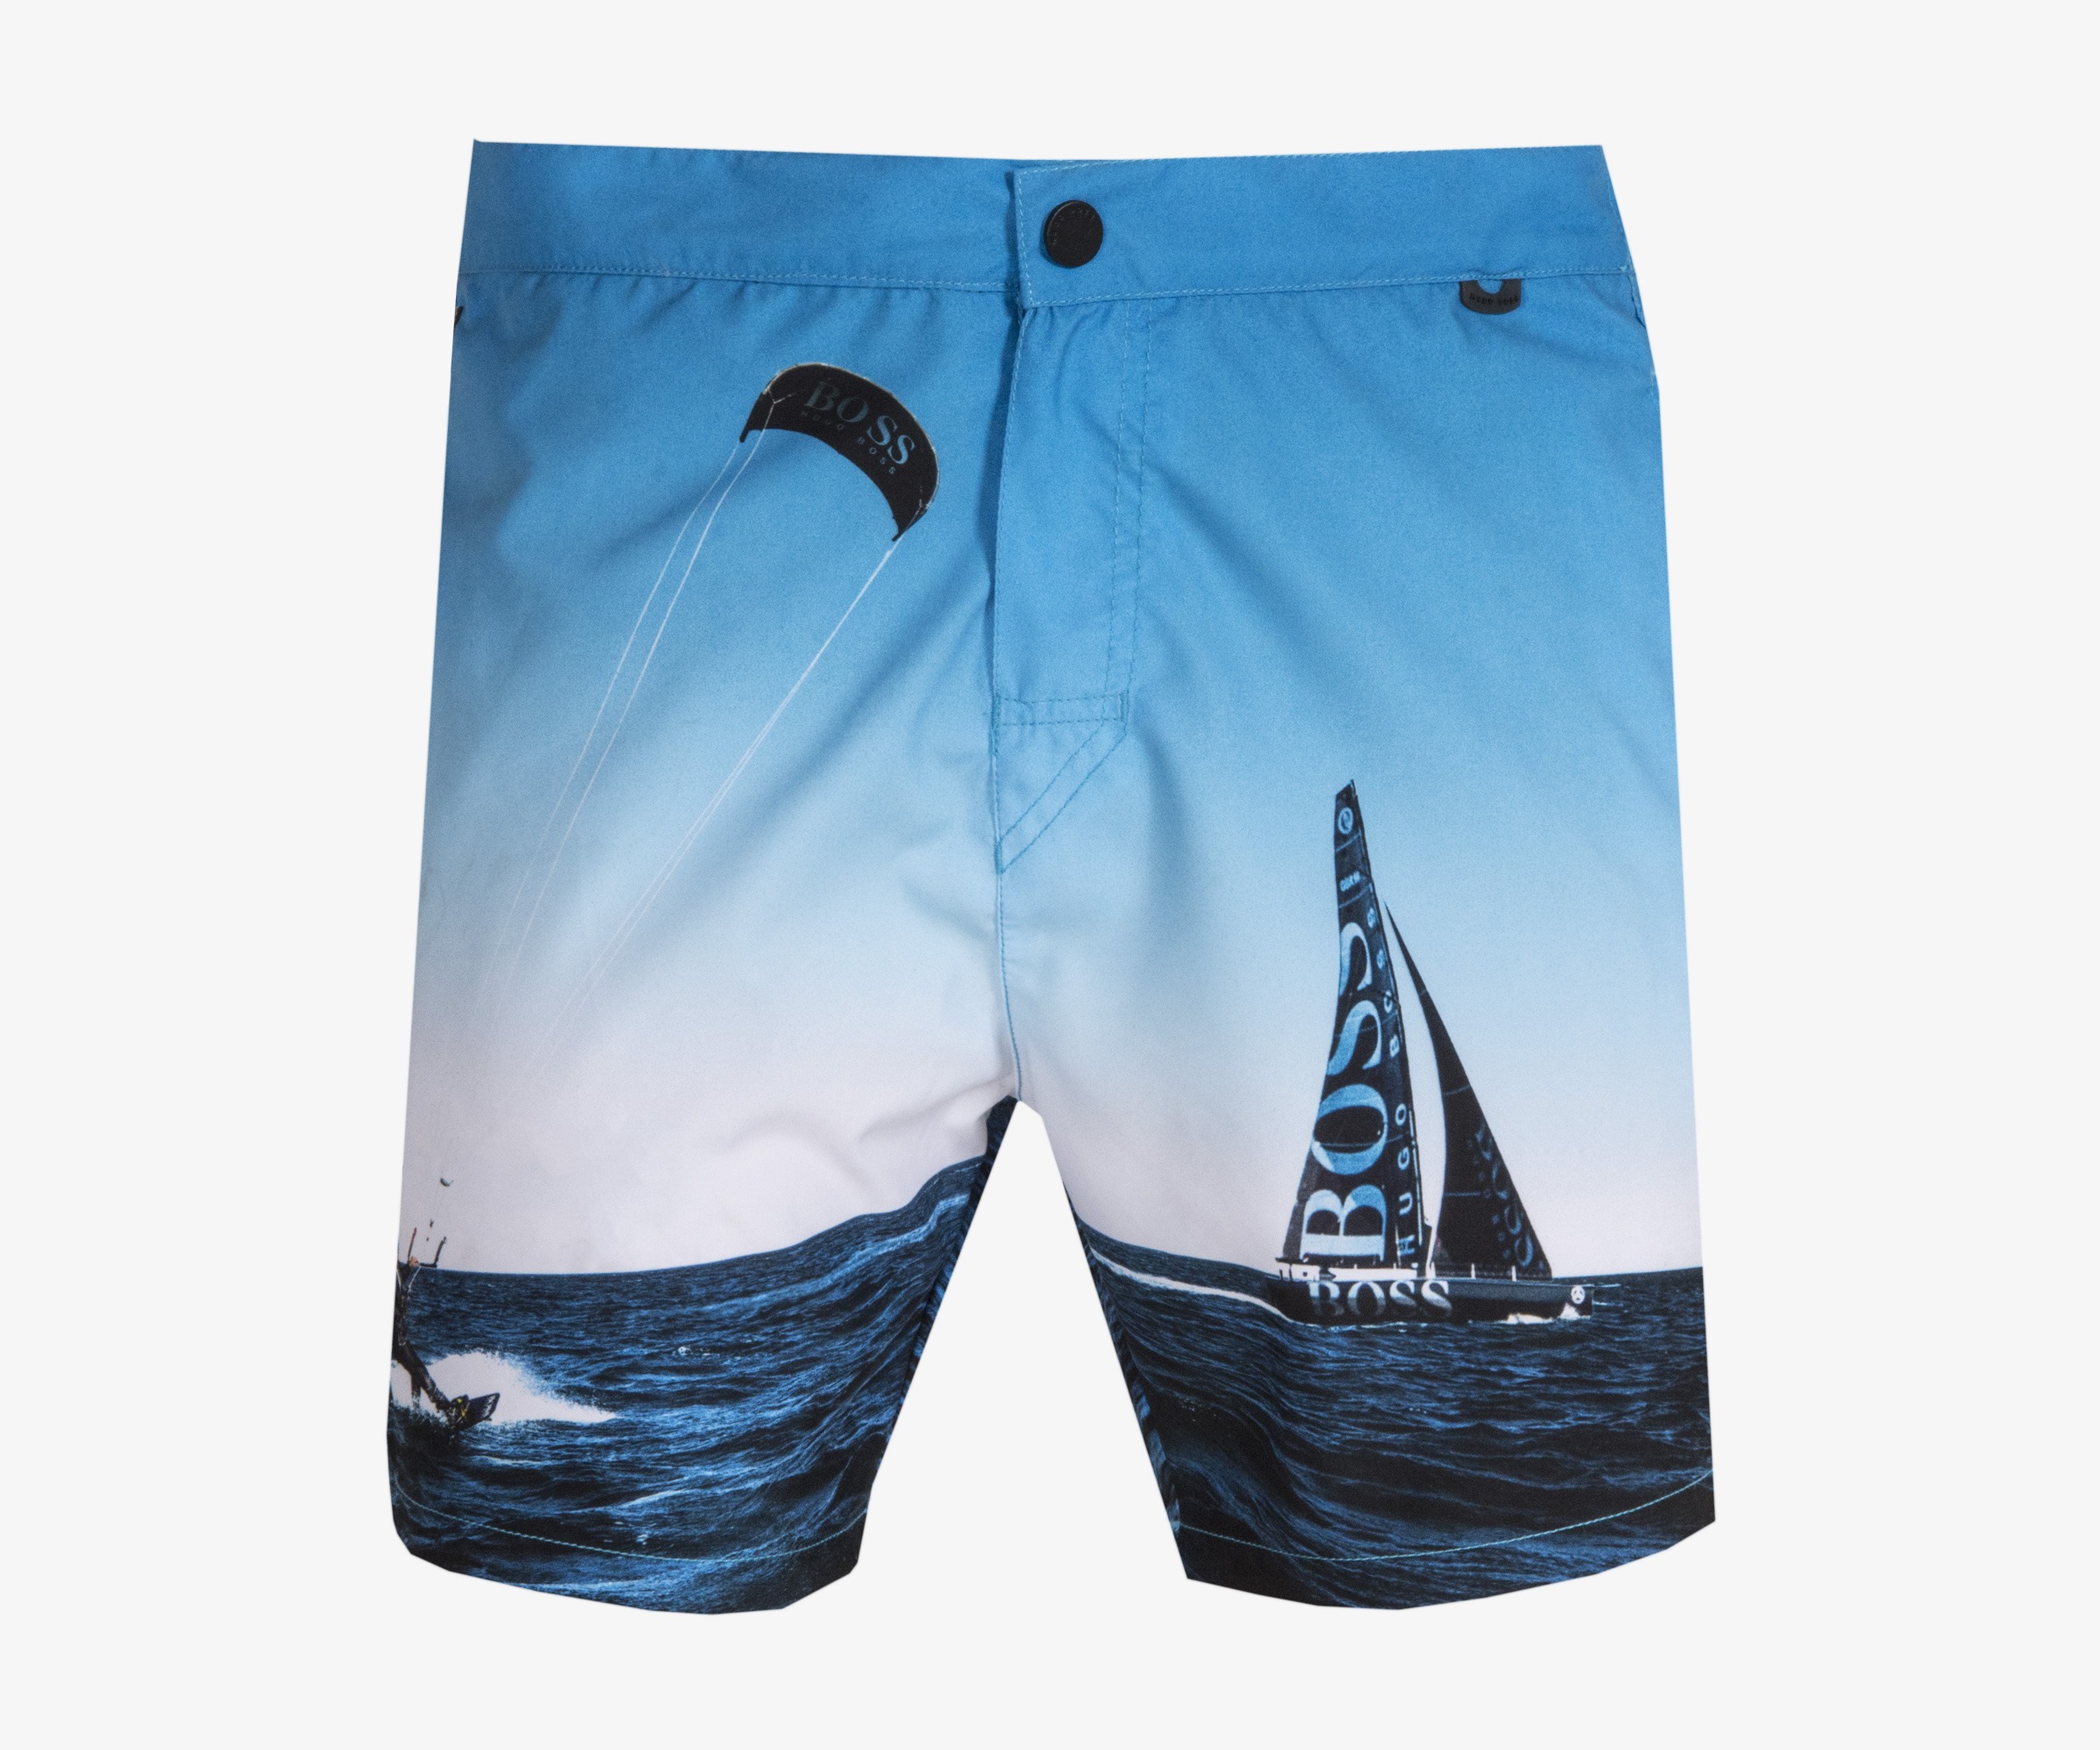 Hugo Boss ’Blackfish’ Swim Shorts With Yacht & Kite Surfing Print